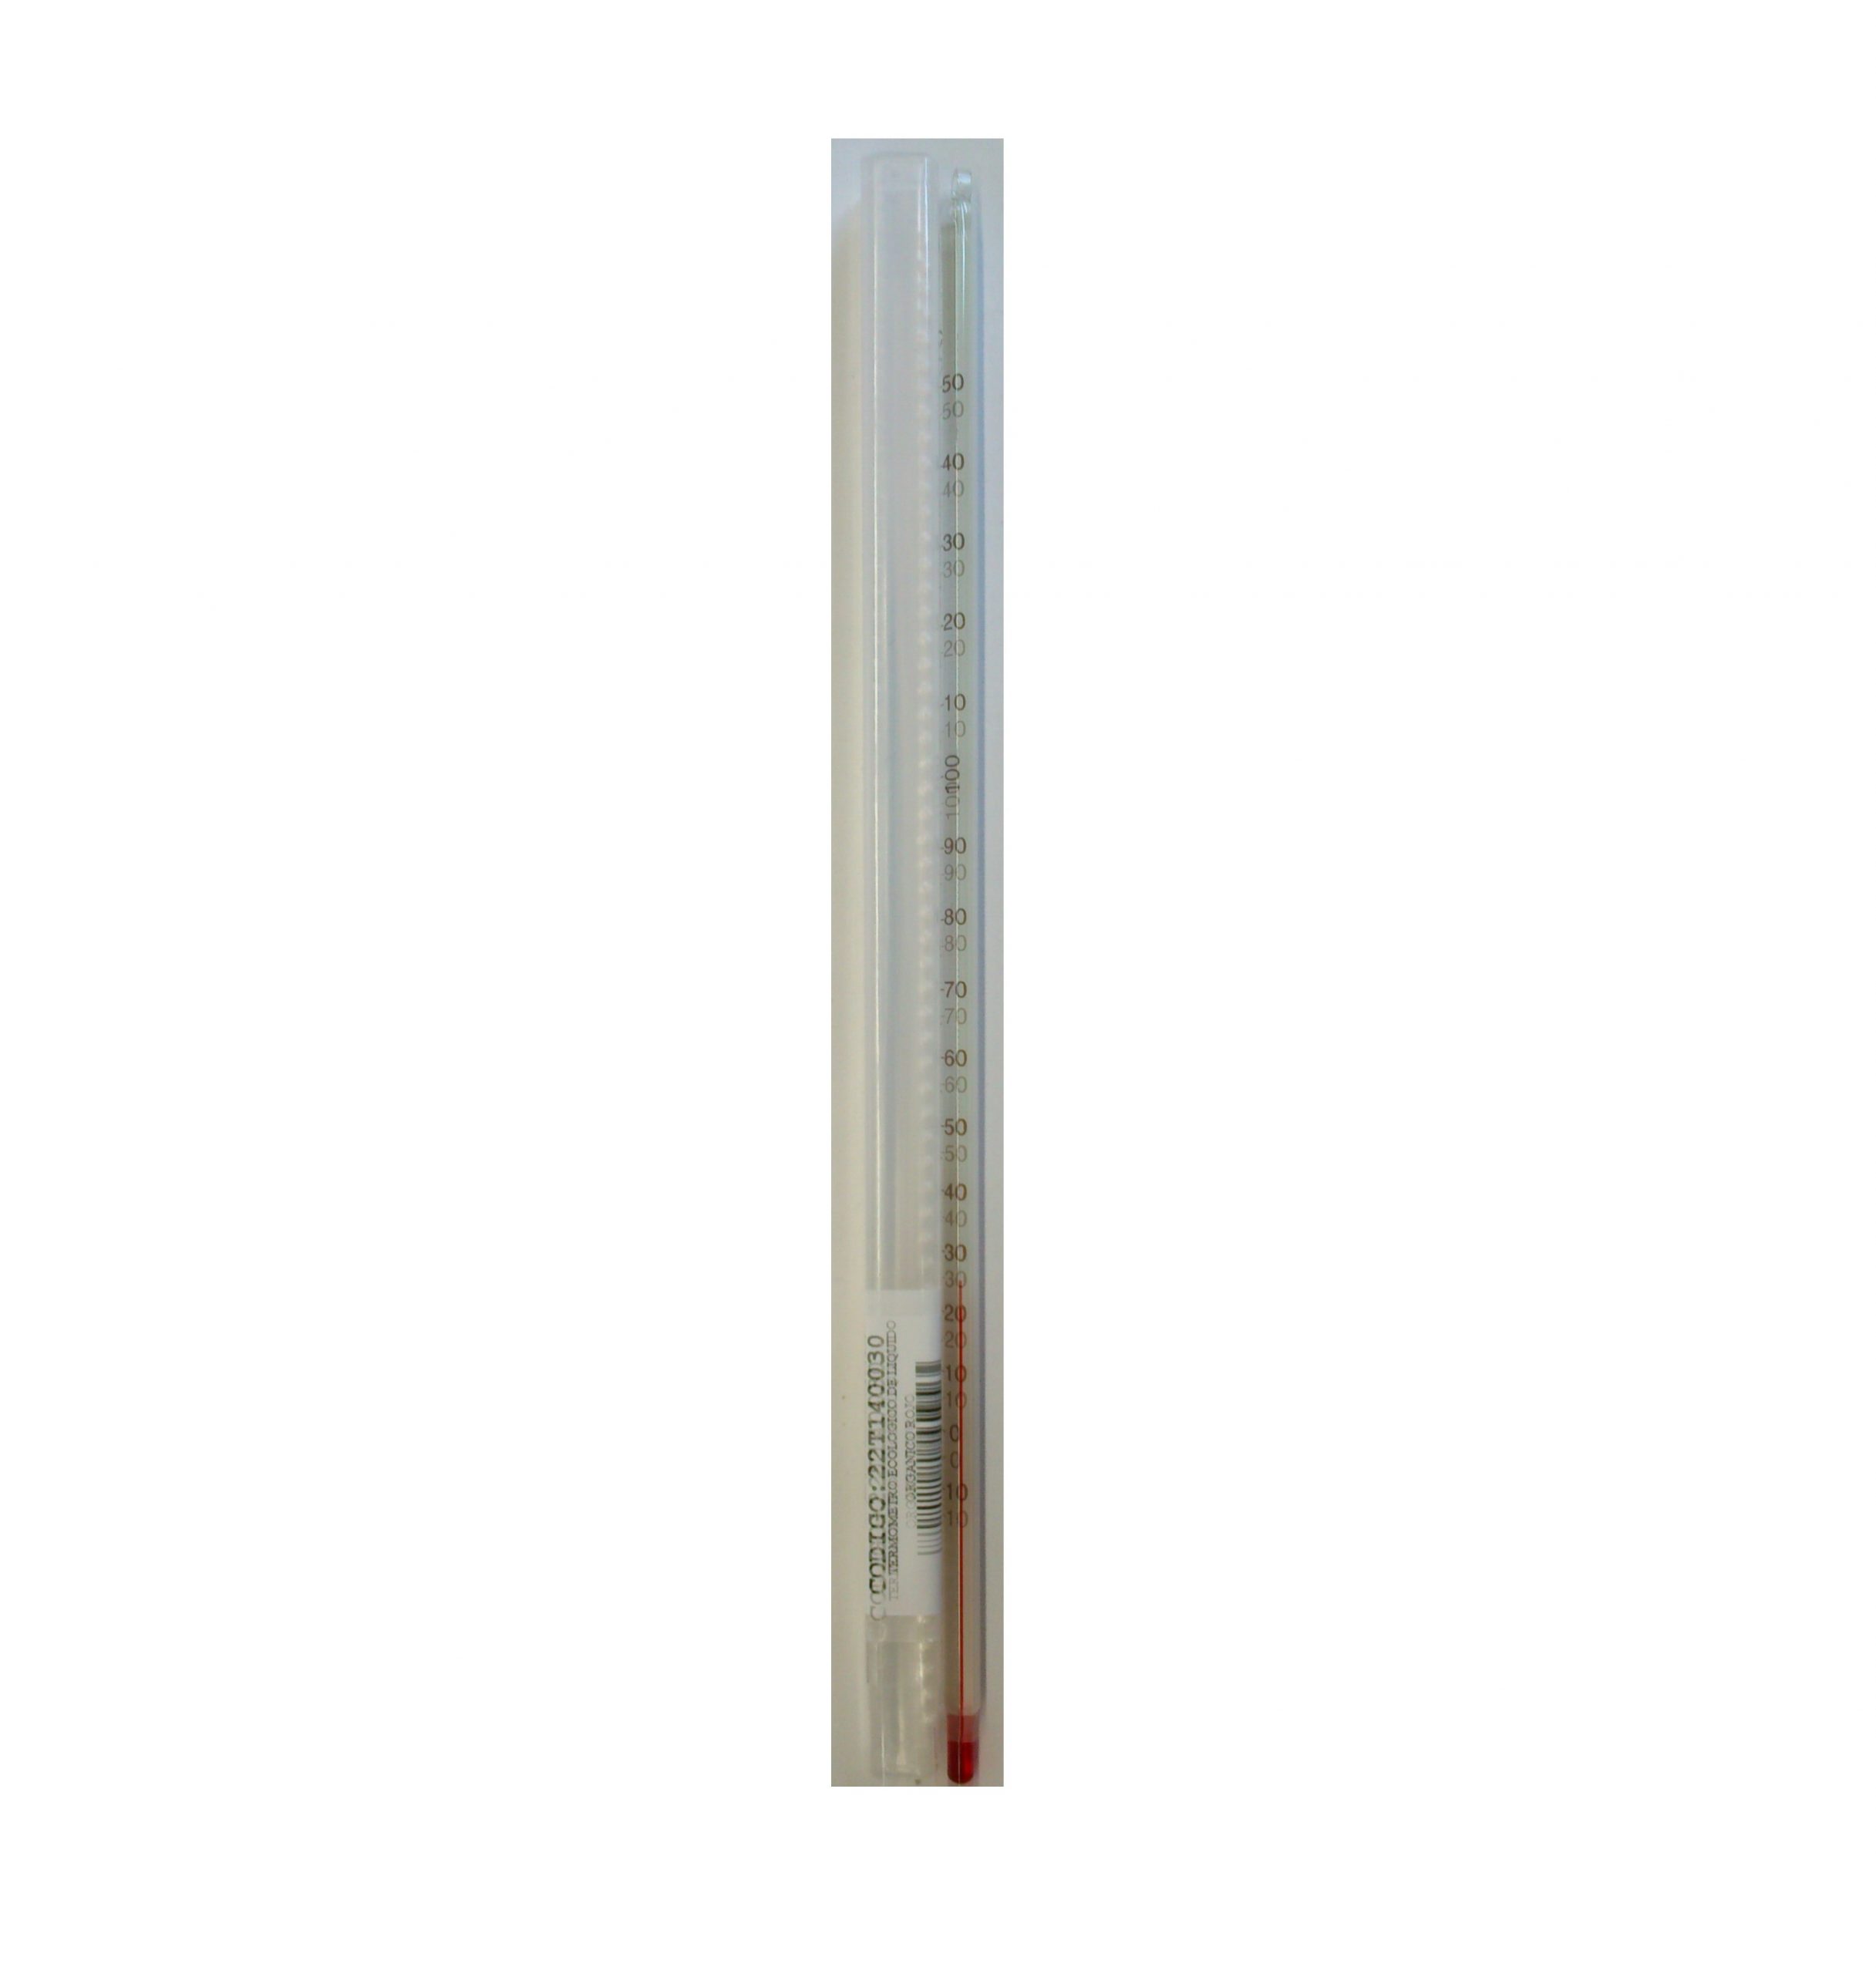 Termómetro Ecológico De Líquido Orgánico Rojo, Rango: -10 a 150 ± 1 °C  AMARELL G11586